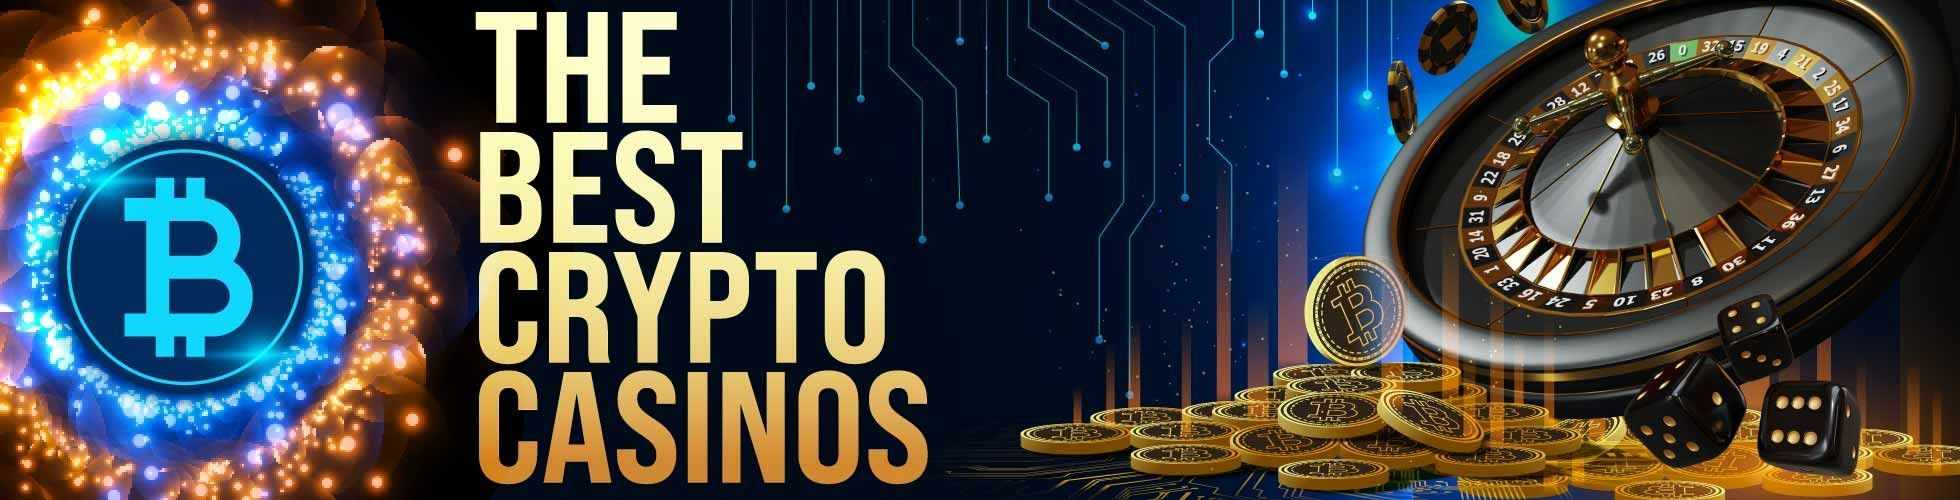 The Best Crypto Casino